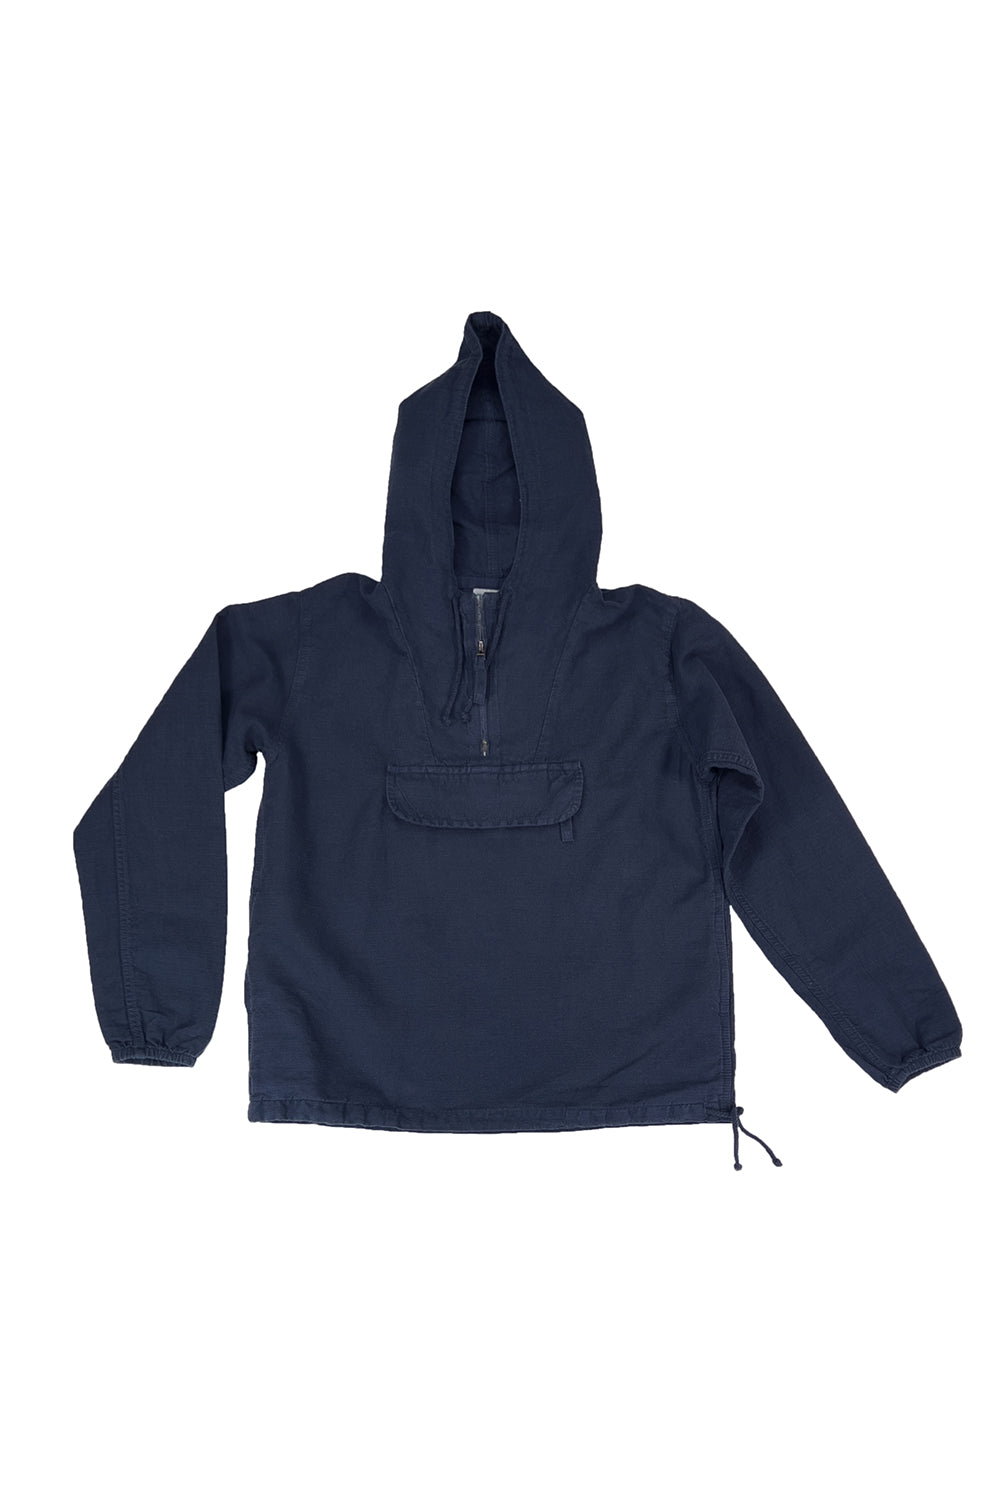 Shoreline Anorak Jacket | Jungmaven Hemp Clothing & Accessories / Color: Navy